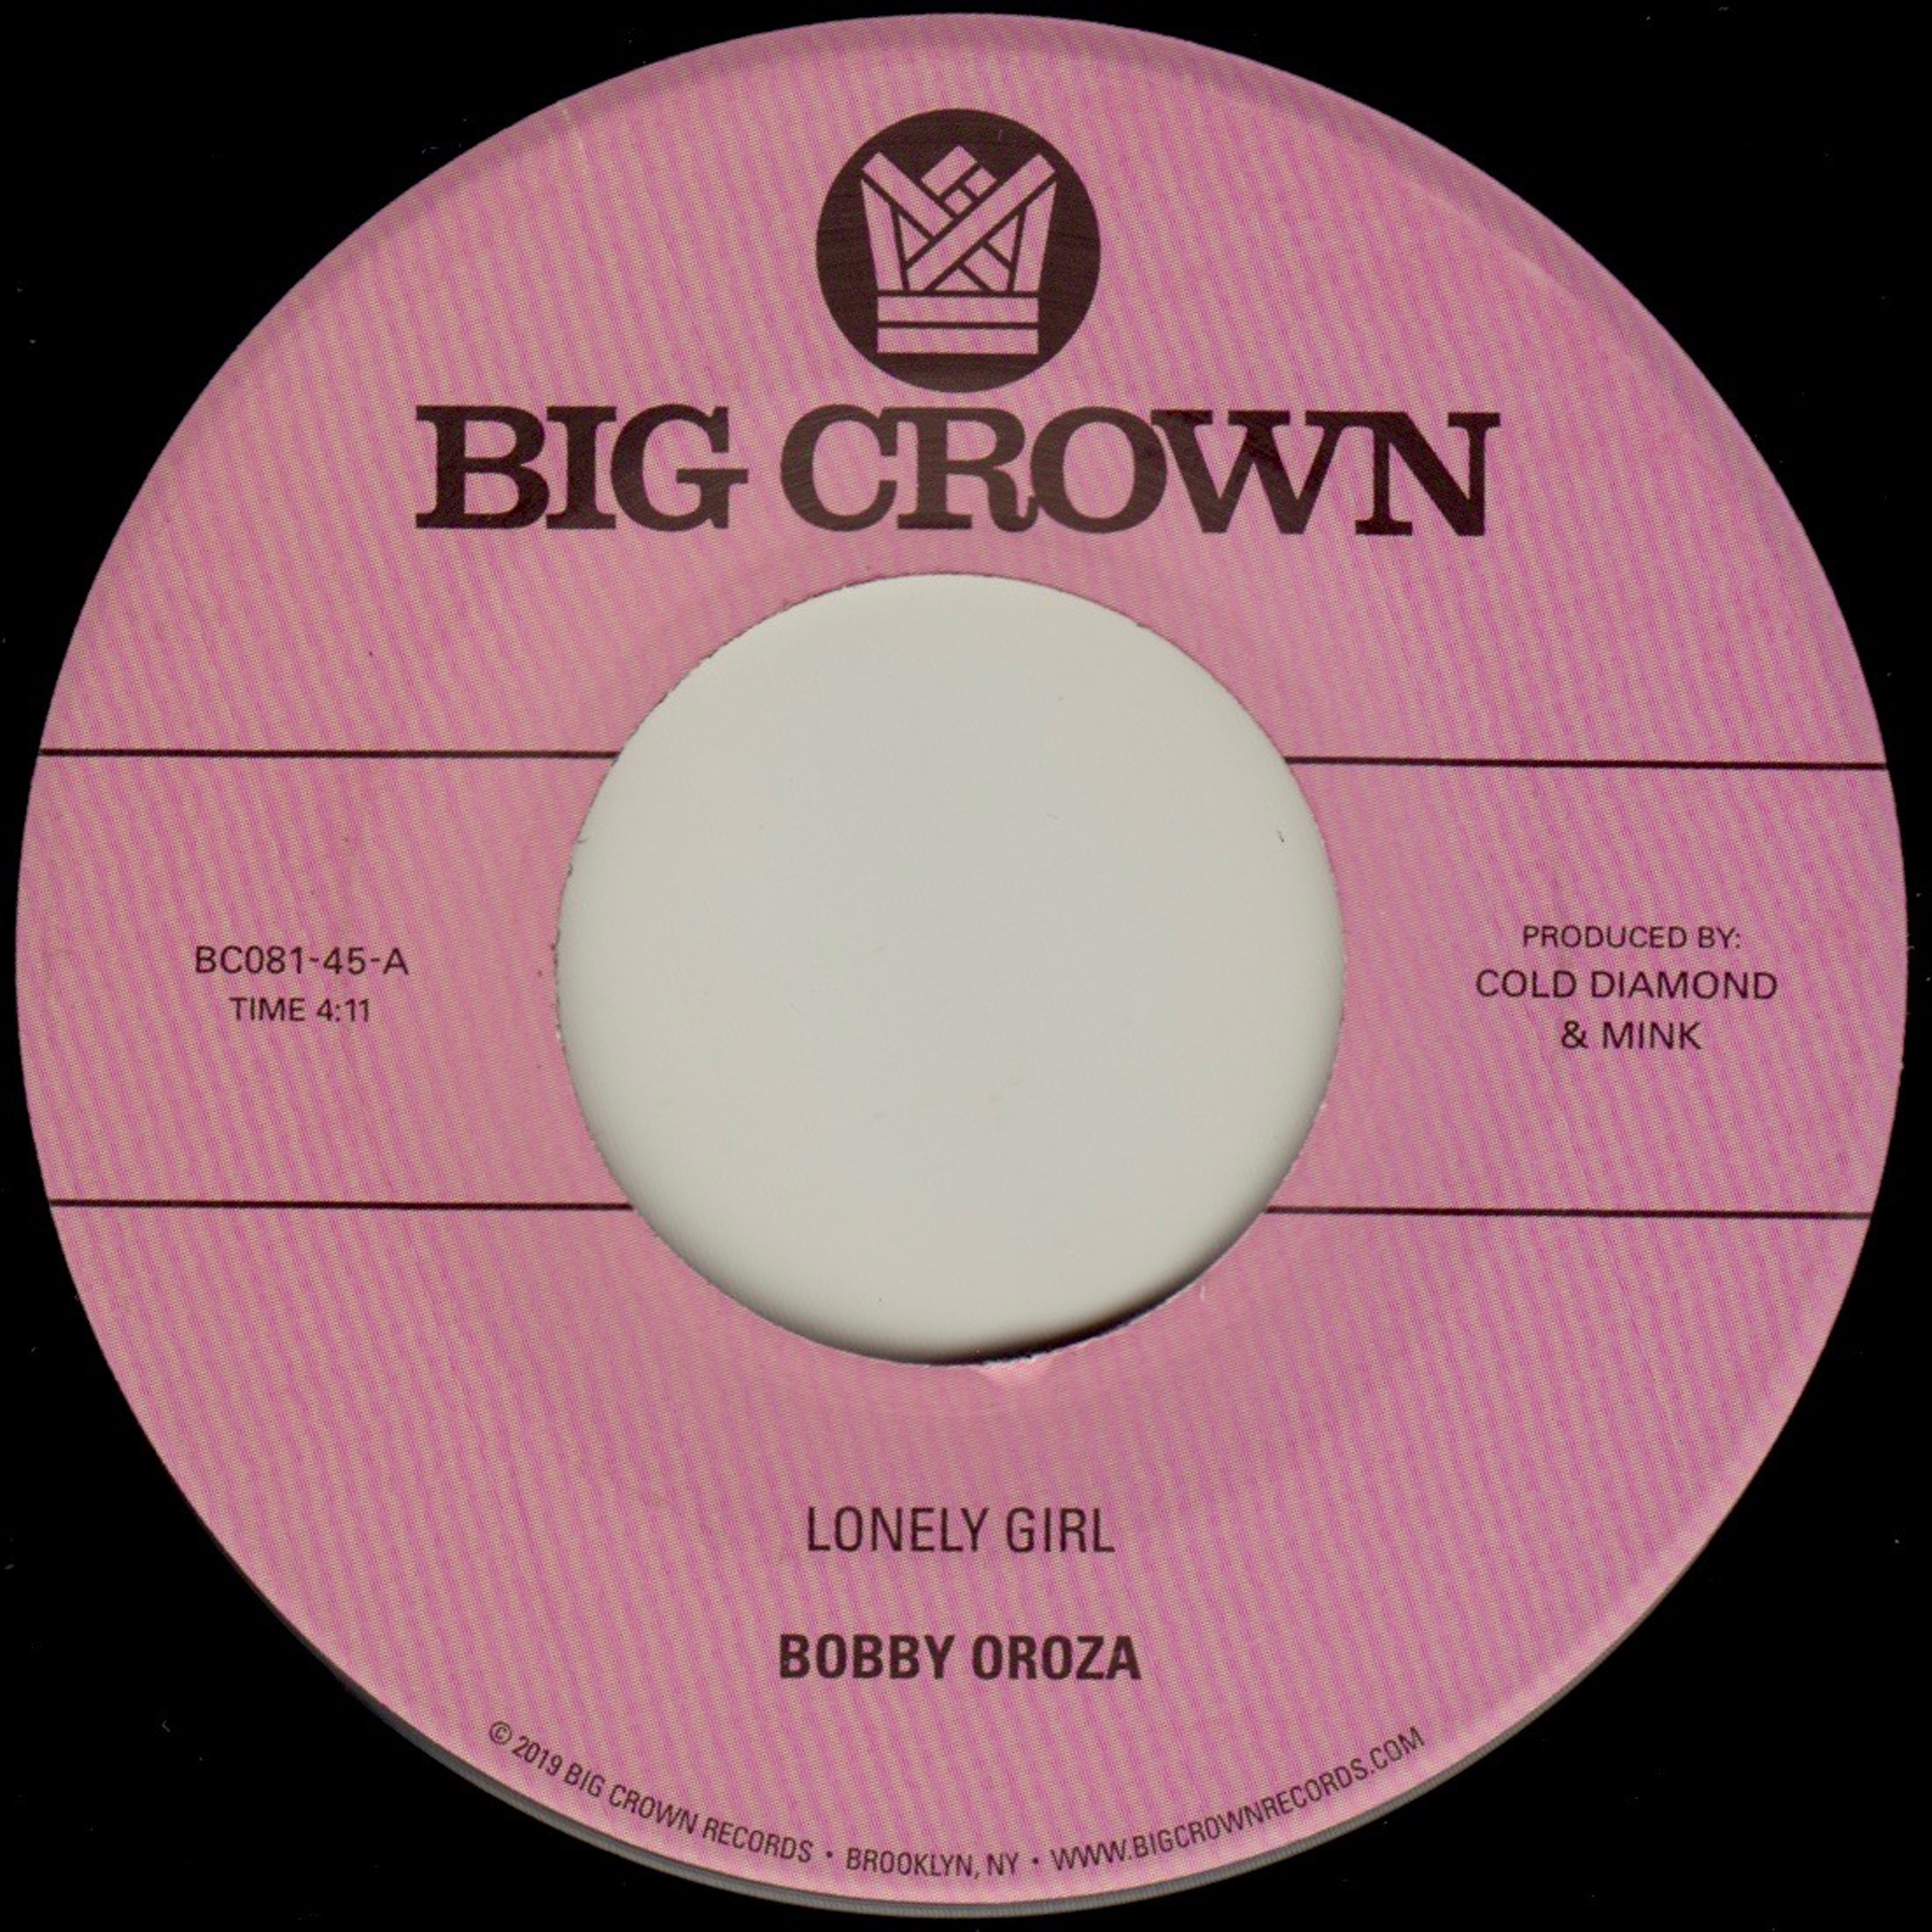 Bobby Oroza - Lonely Girl b/w Alone Again